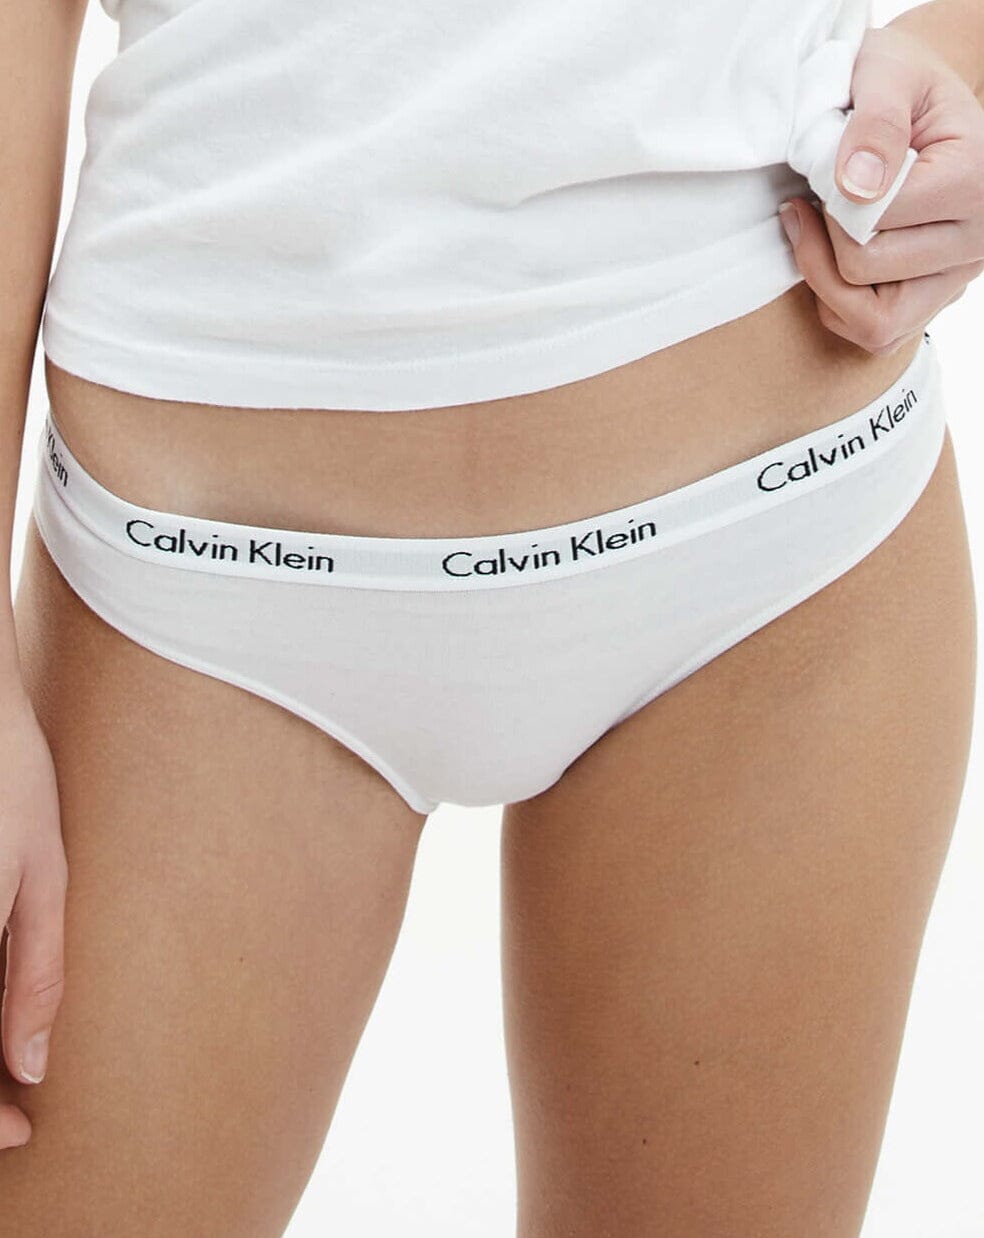 Calvin Klein Underwear Panties - Carousel Brazilian Briefs White